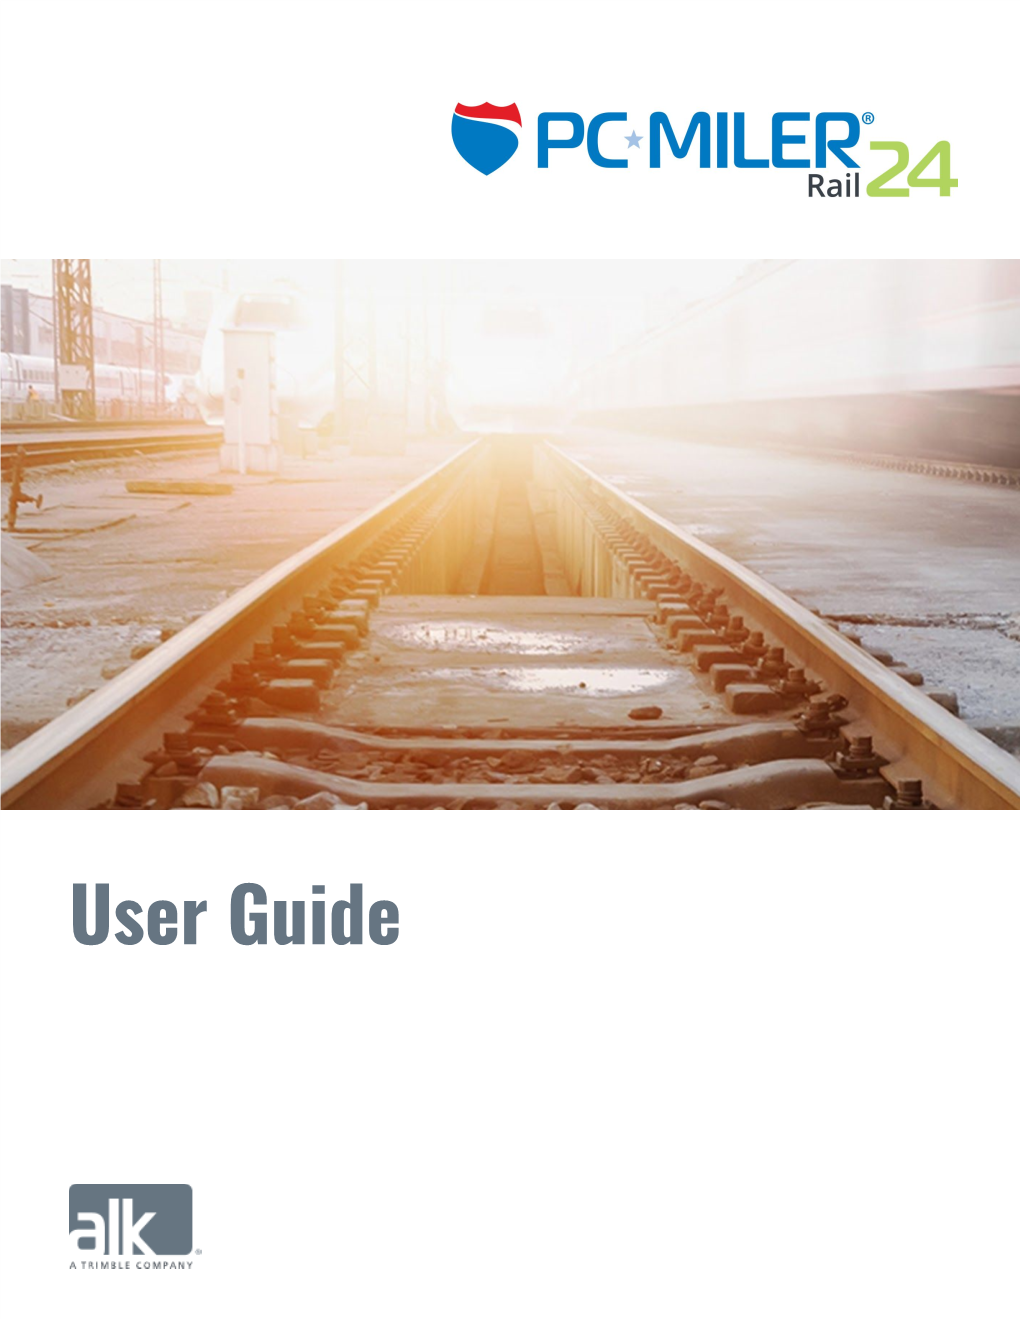 PC*MILER|Rail 24 Software Order…” (Enterprise License Customers Excluded, See Note in Step 4 Below)